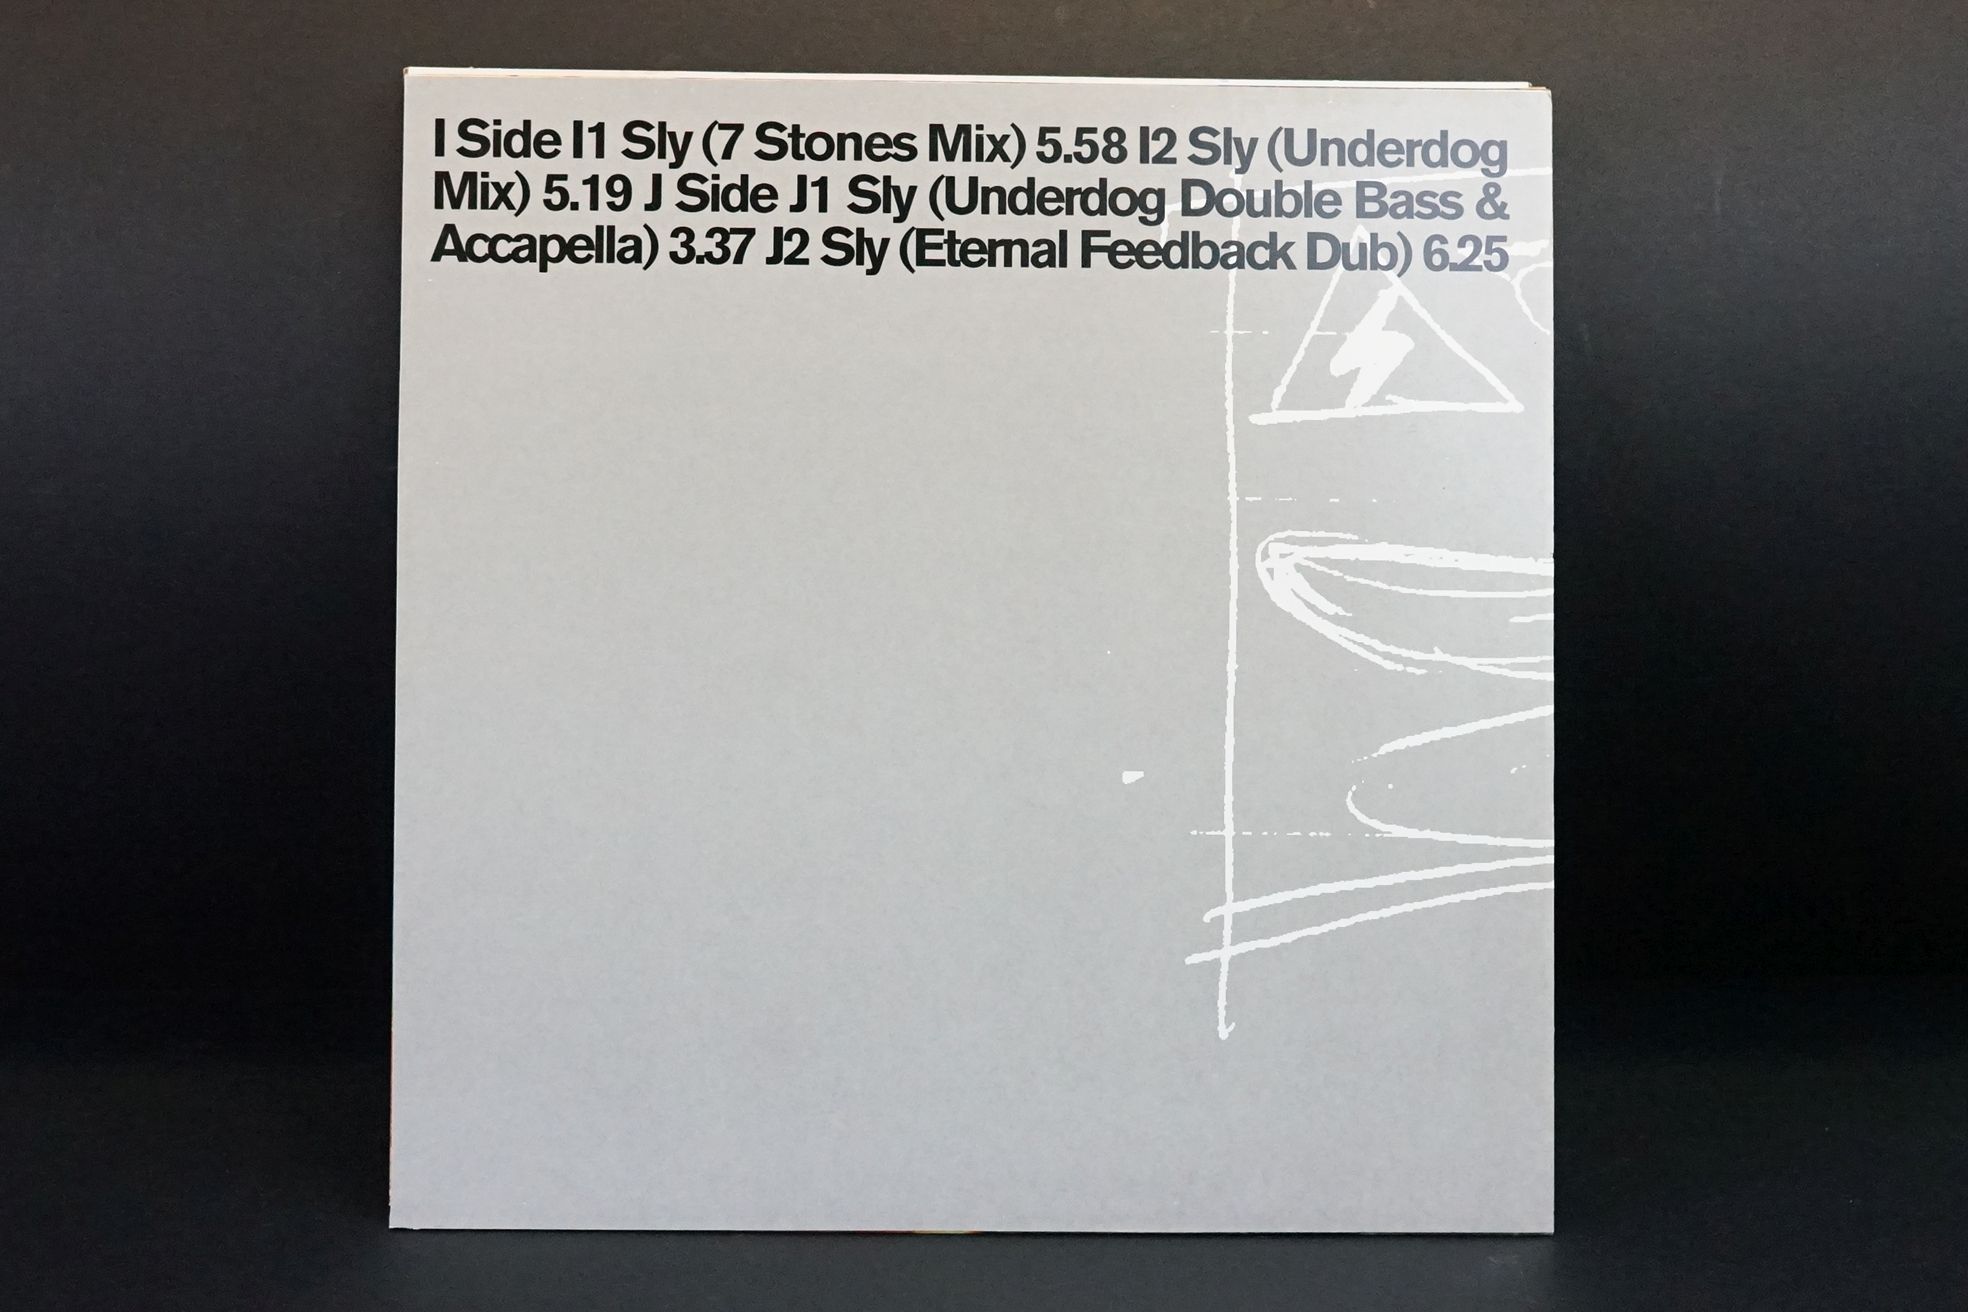 Vinyl - Massive Attack Singles 90/98 Box Set (Virgin – MASBOX) with 11 discs on heavyweight vinyl, - Image 10 of 15